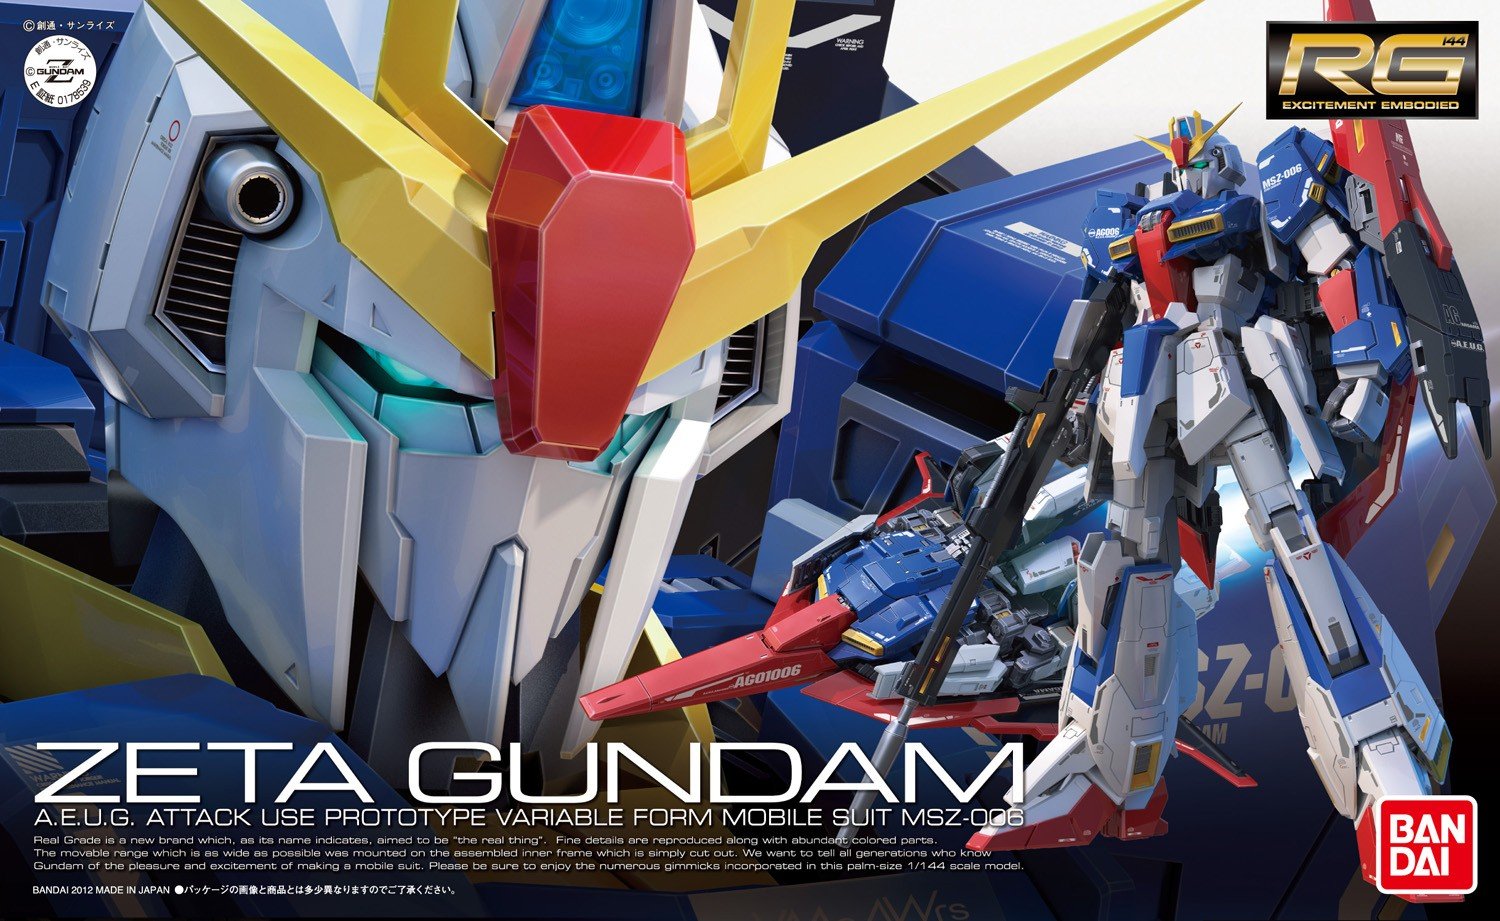 RG Gundam Zeta 1/144 - gundam-store.dk